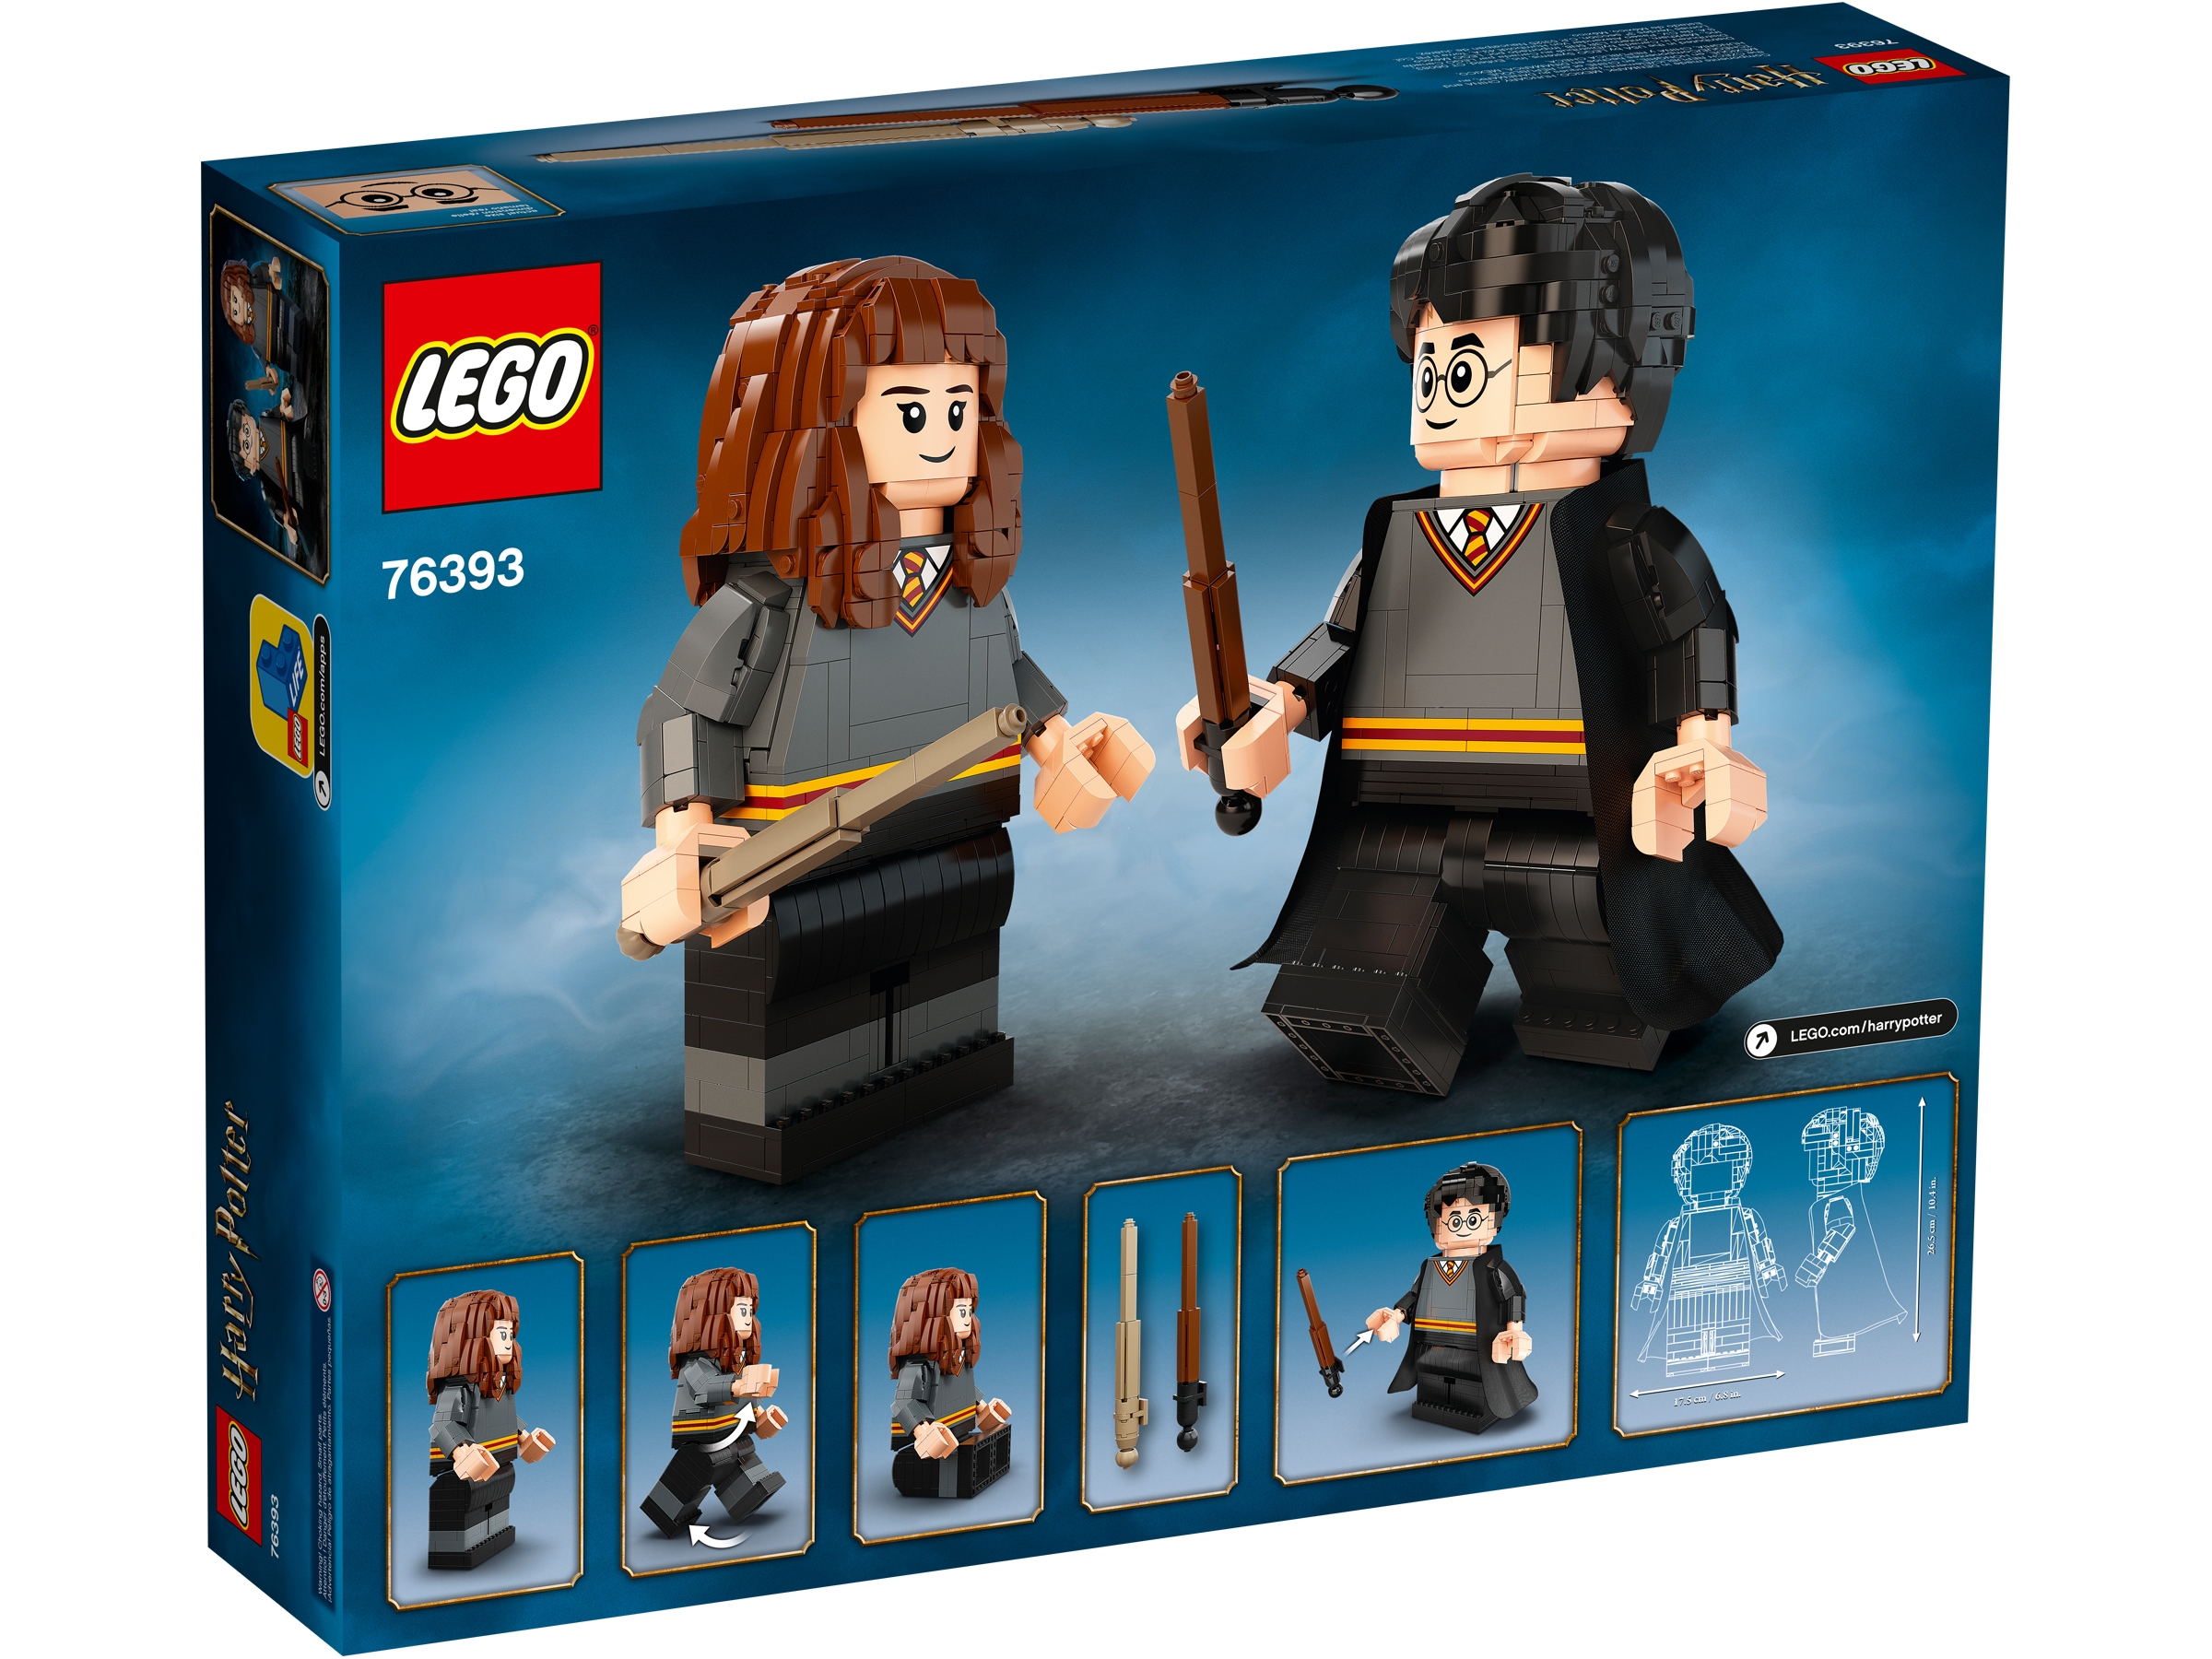 Lego Hermione Granger Mini Figure B0044CEXJO 